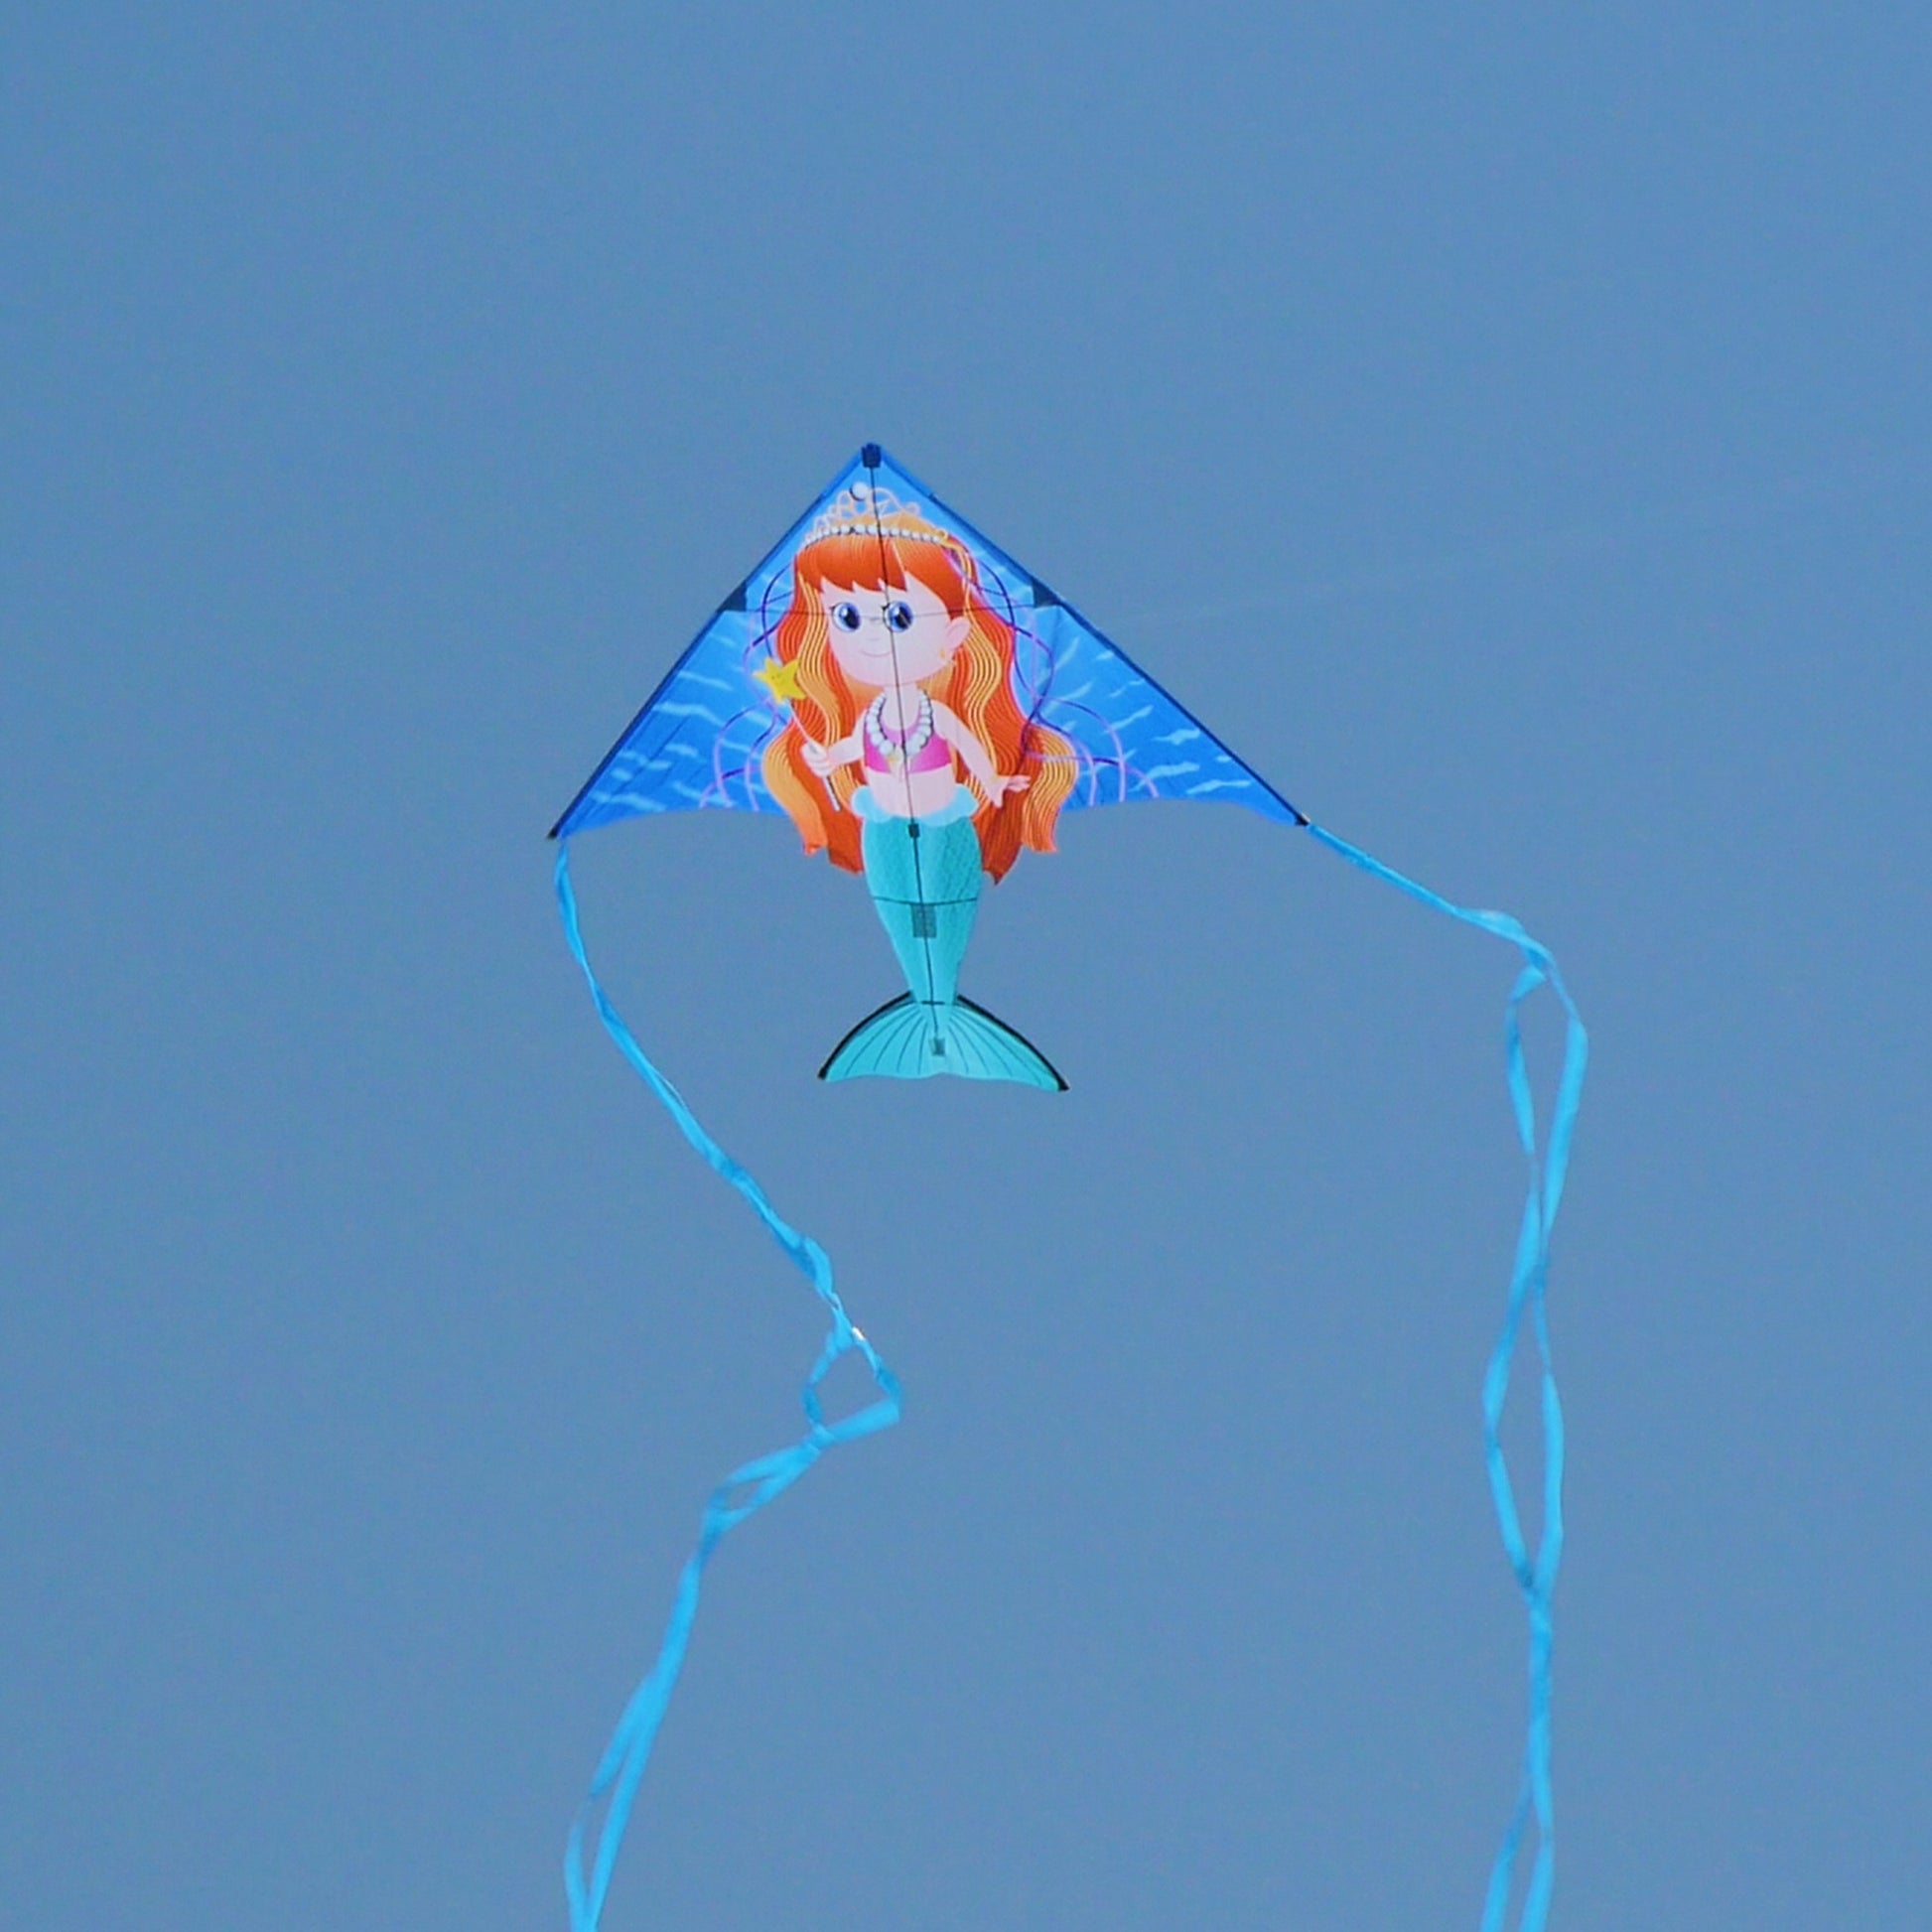 windnsun delta xt mermaid nylon kite flying